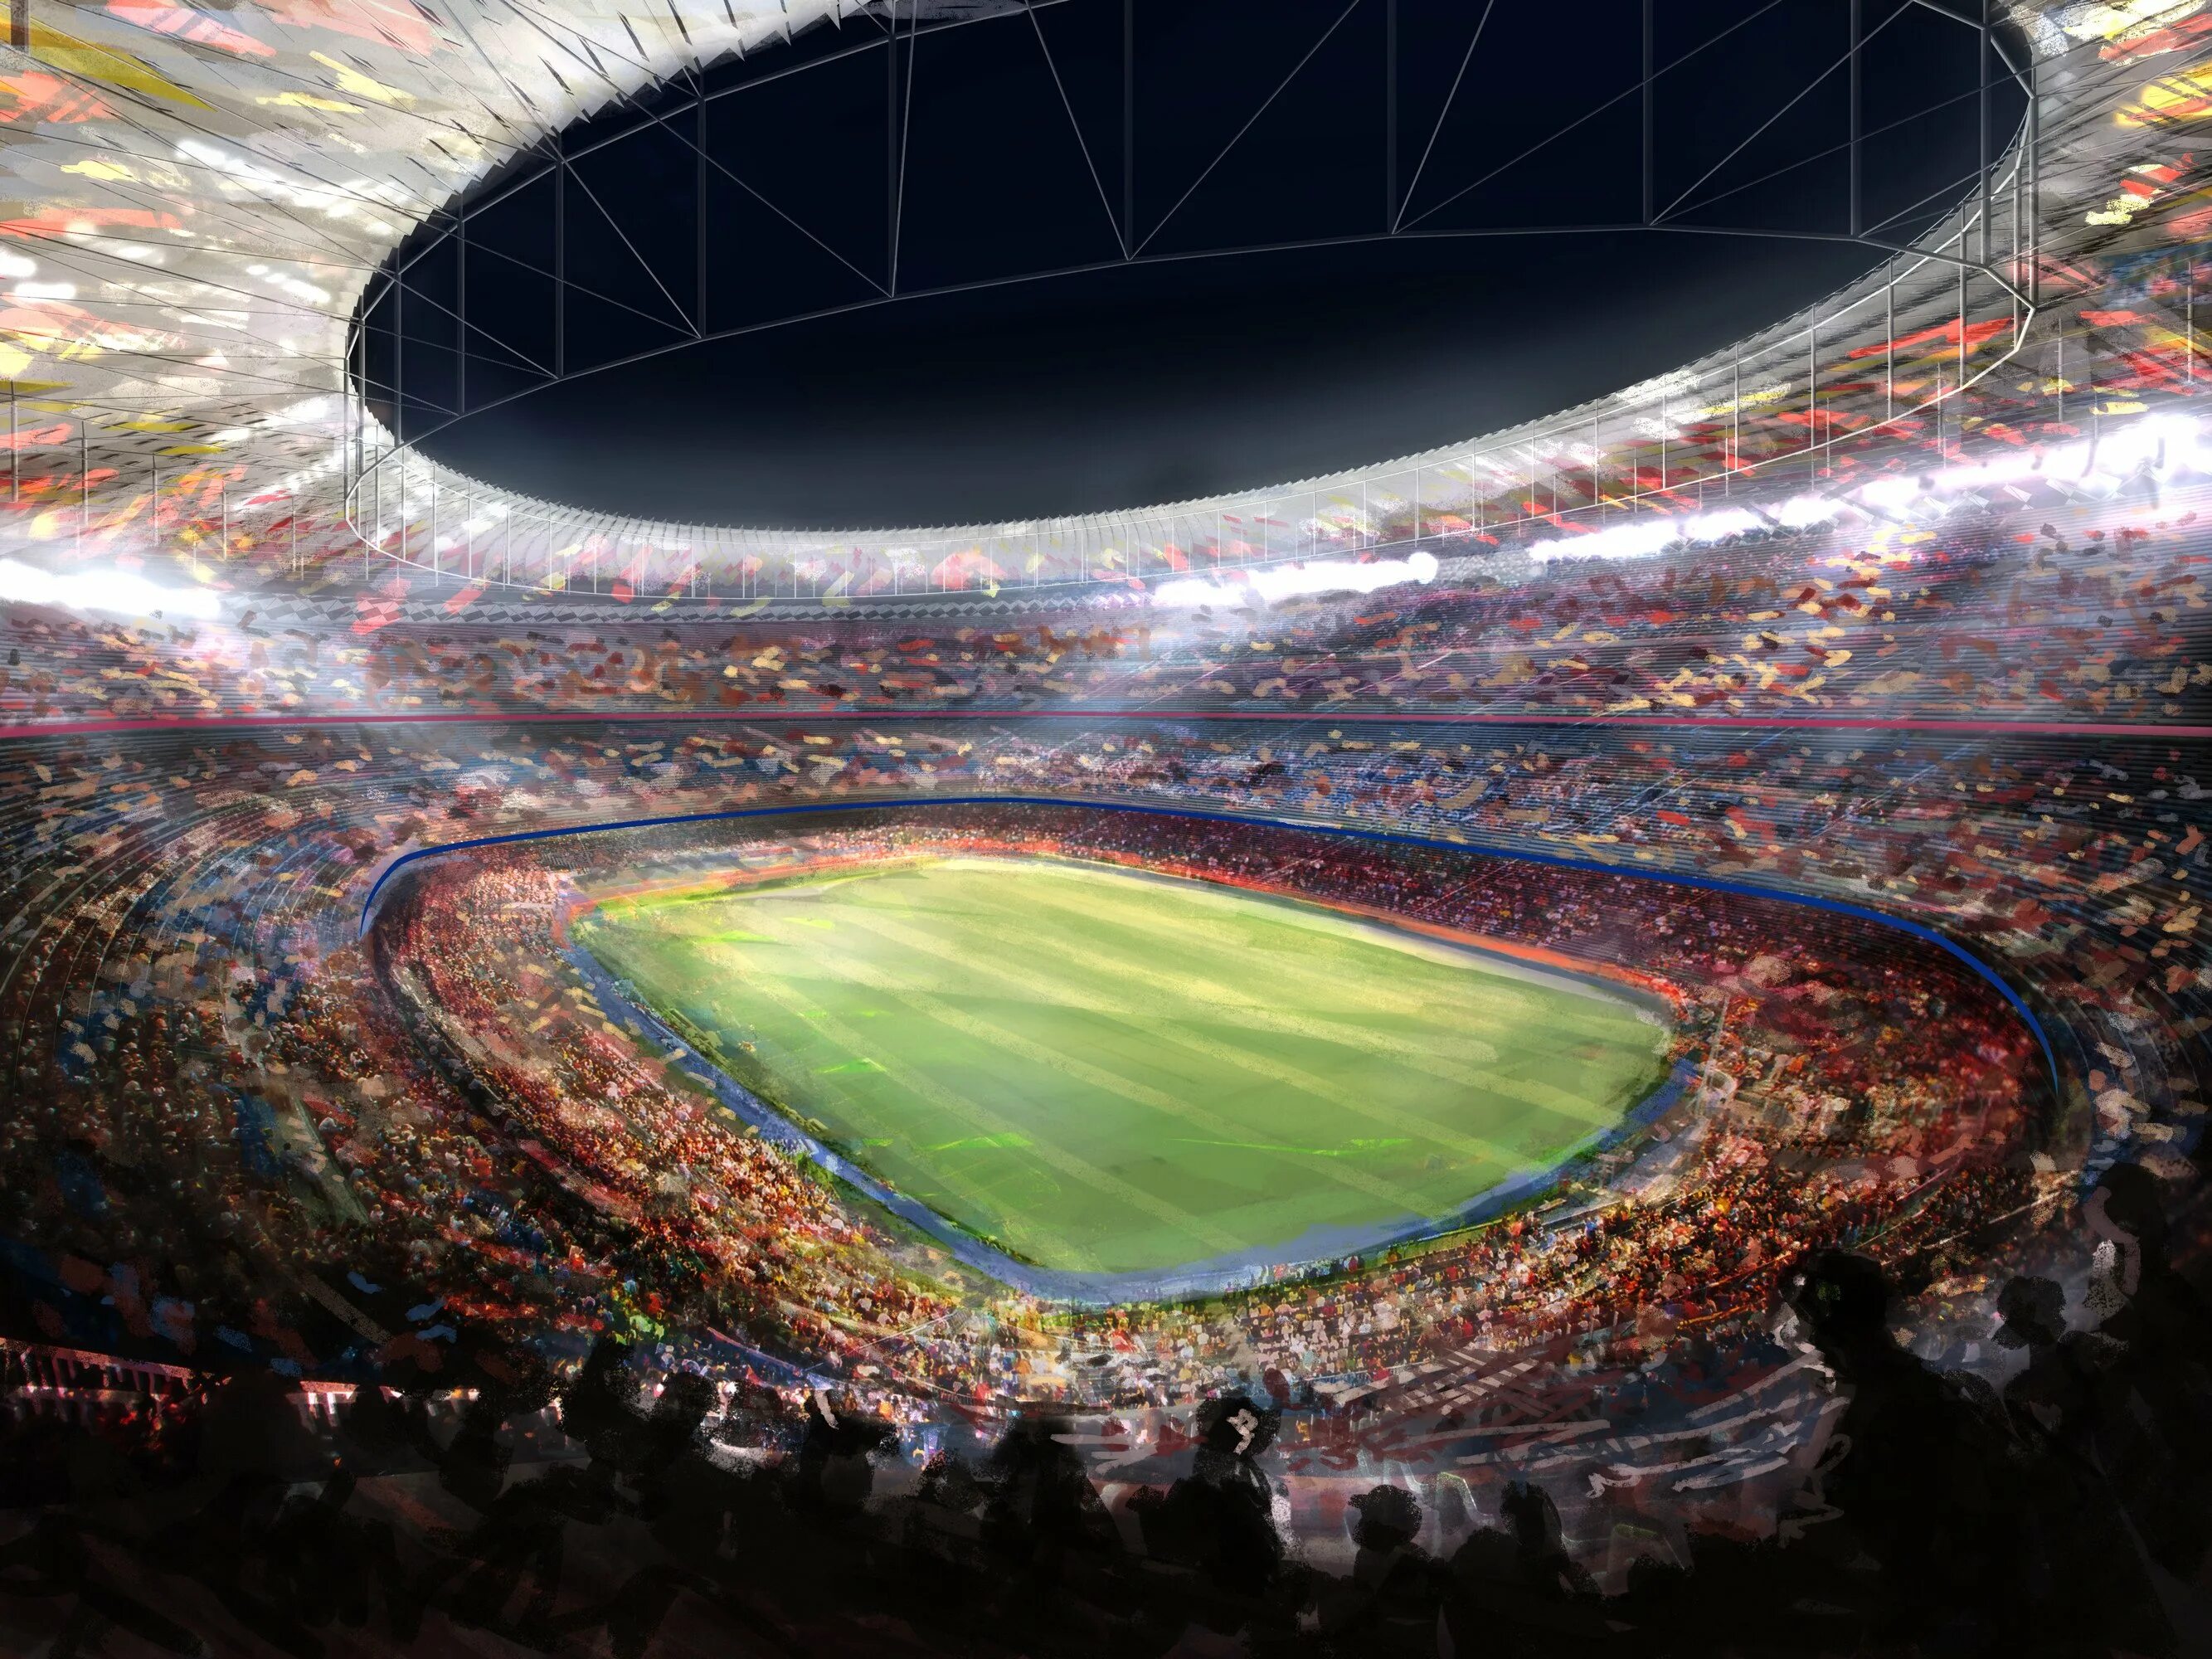 Граждан стадион. Камп ноу стадион. Стадион Барселоны. Фотообои стадион ноу Камп. Стадион Камп ноу в Барселоне.